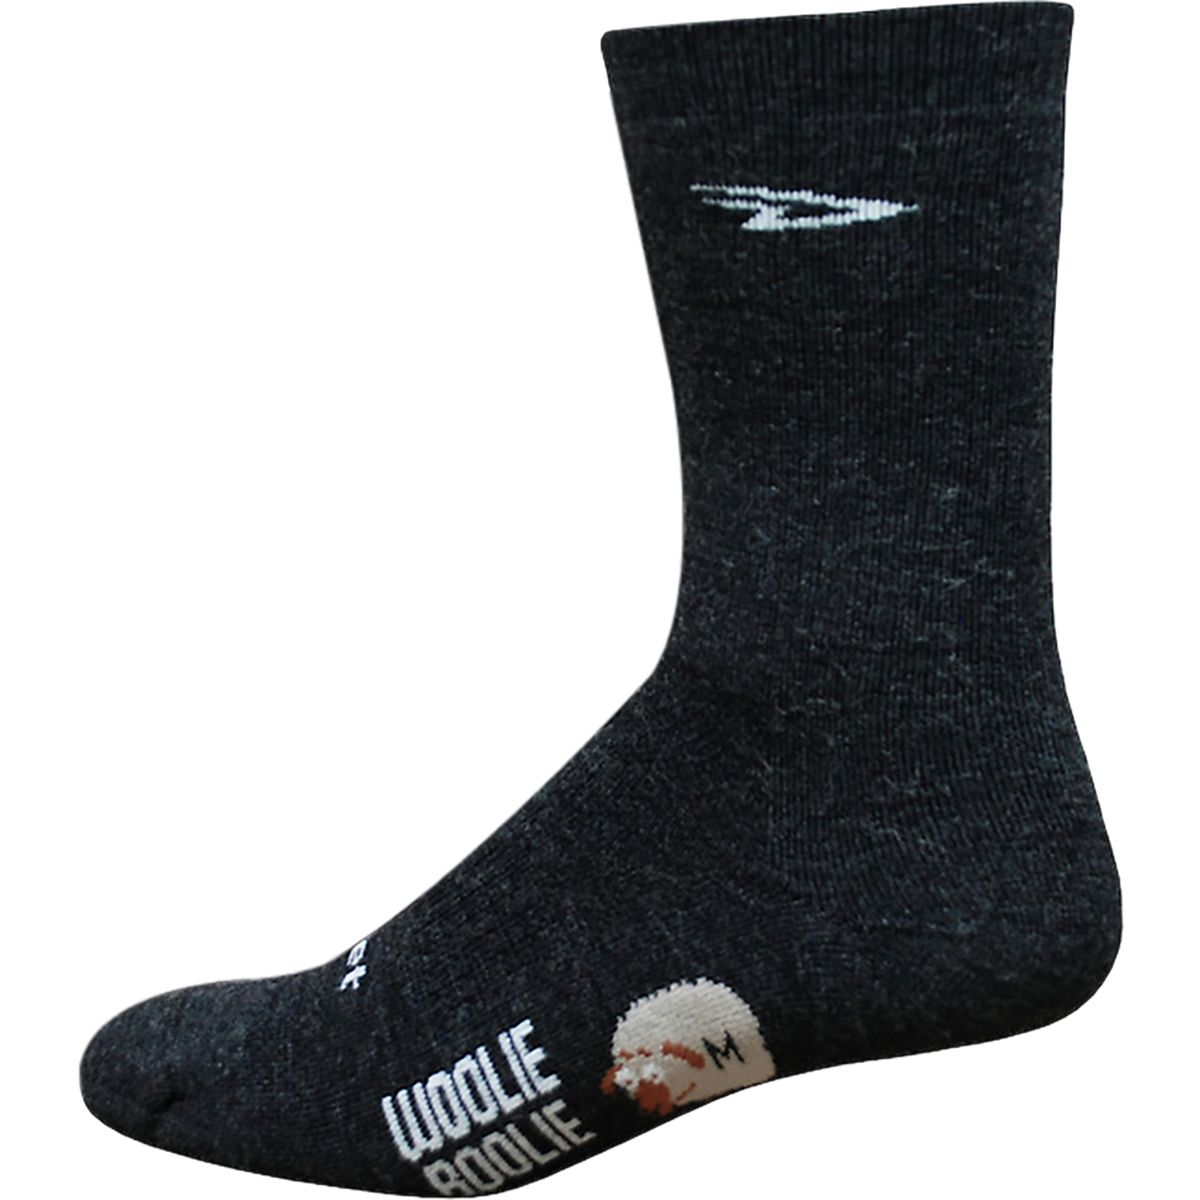 DeFeet Woolie Boolie D-Logo 6in Sock - Men's